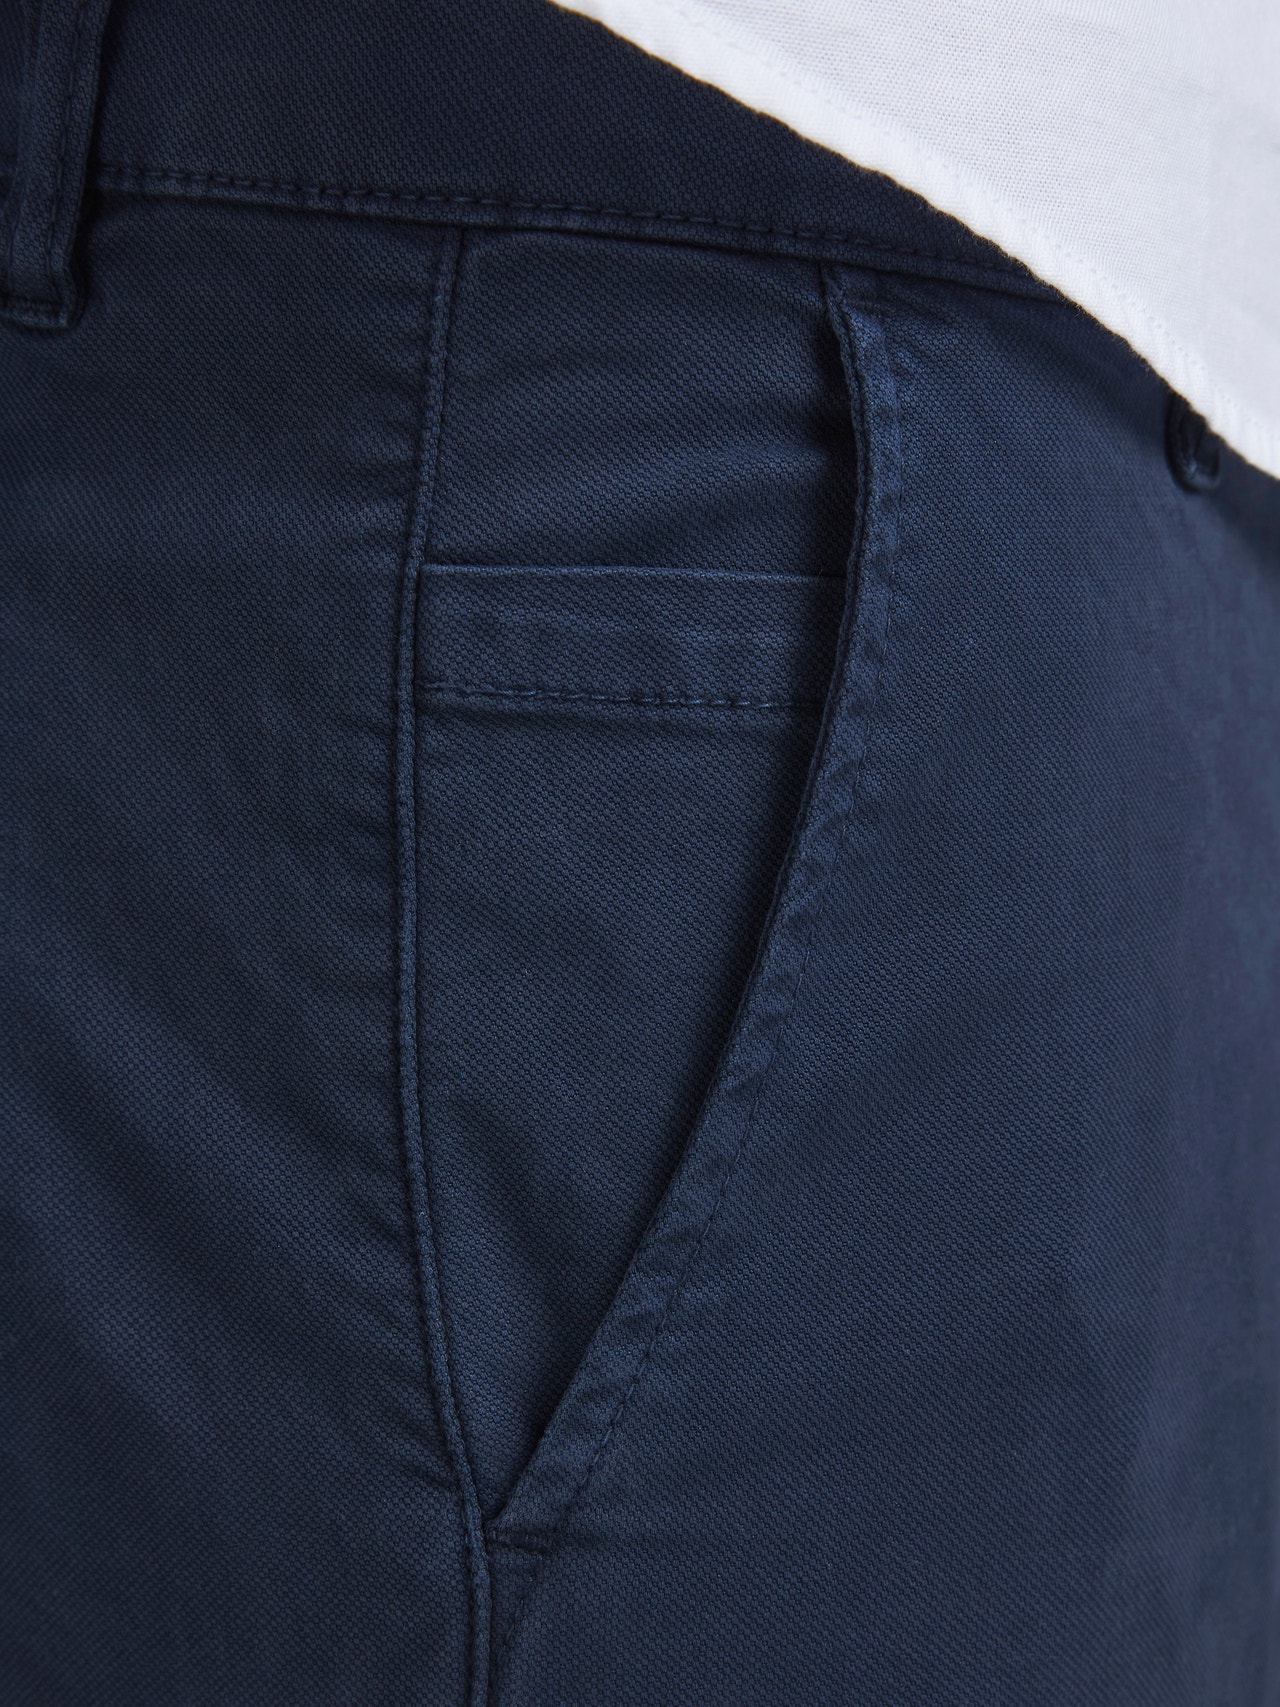 Jack & Jones Pantaloni chino Slim Fit -Navy Blazer - 12254931